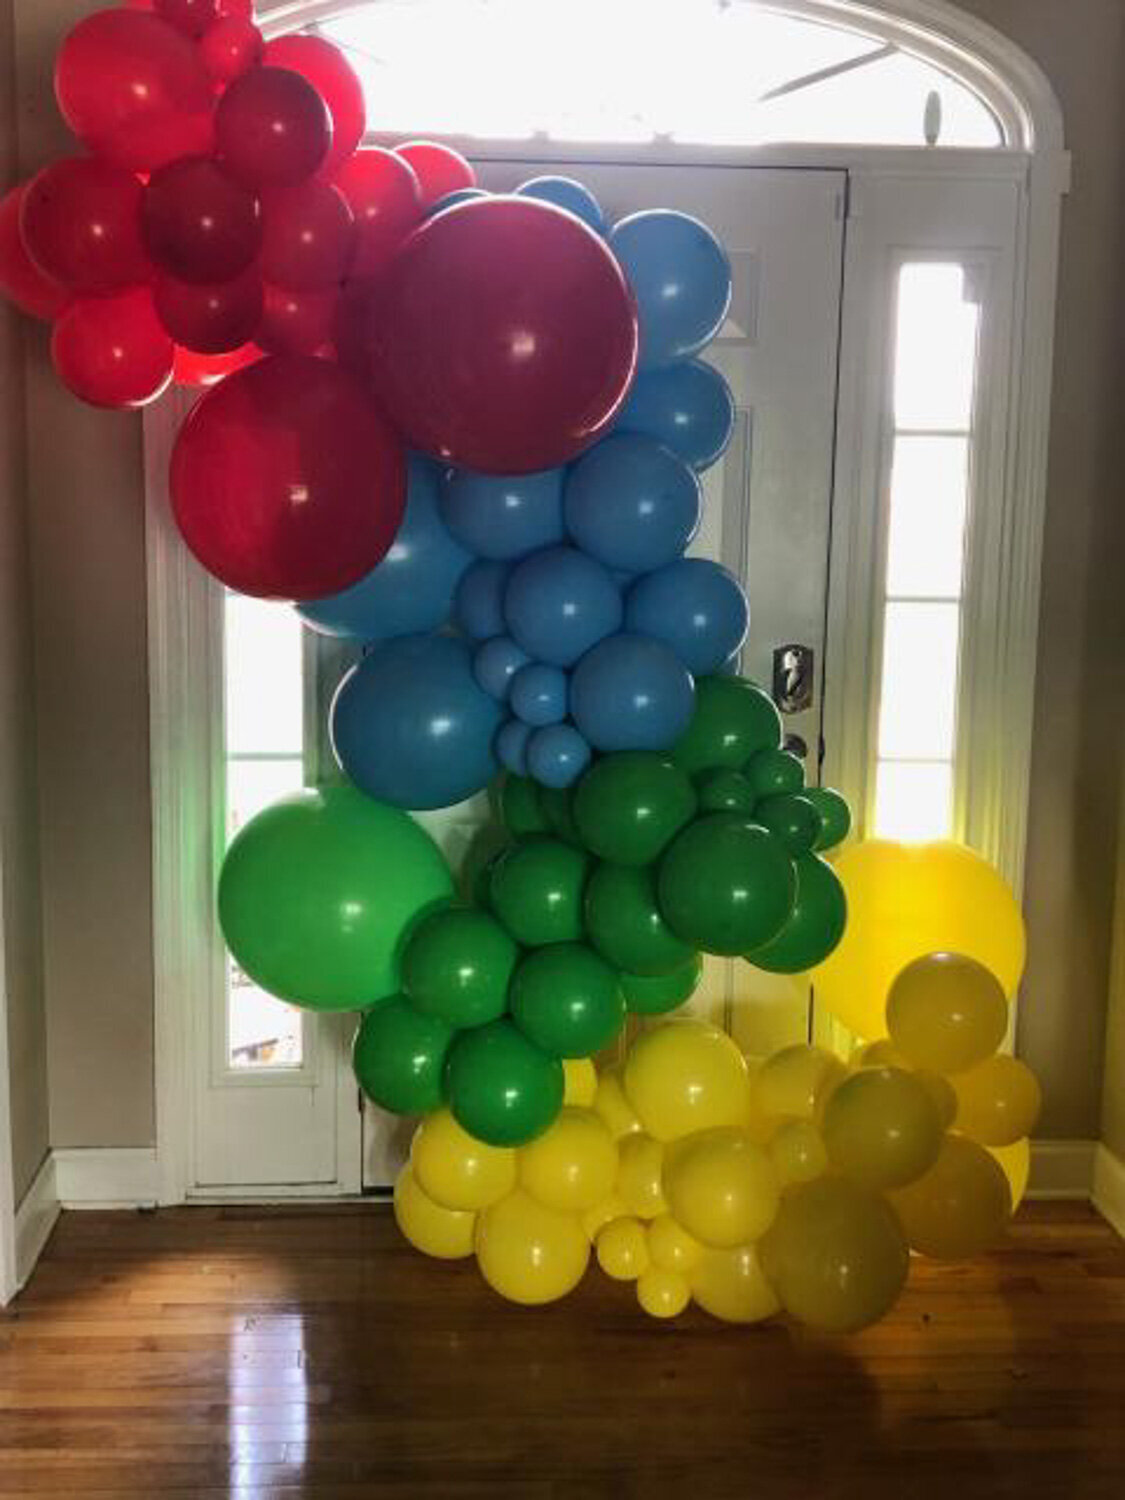 Balloon-Rental-Display-in-South-Carolina-2